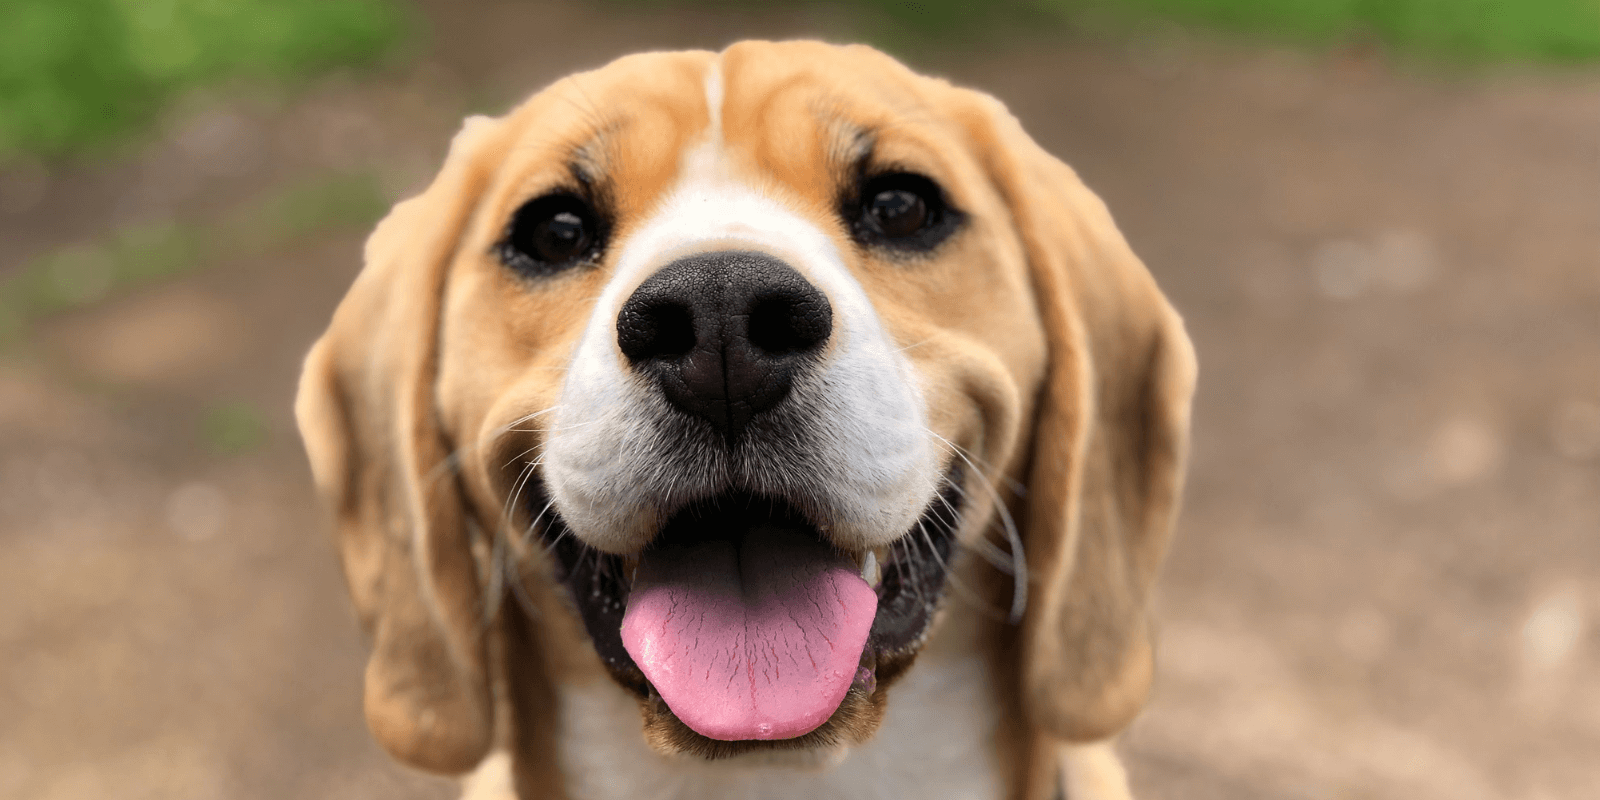 Close-up photo of a smiling Beagle